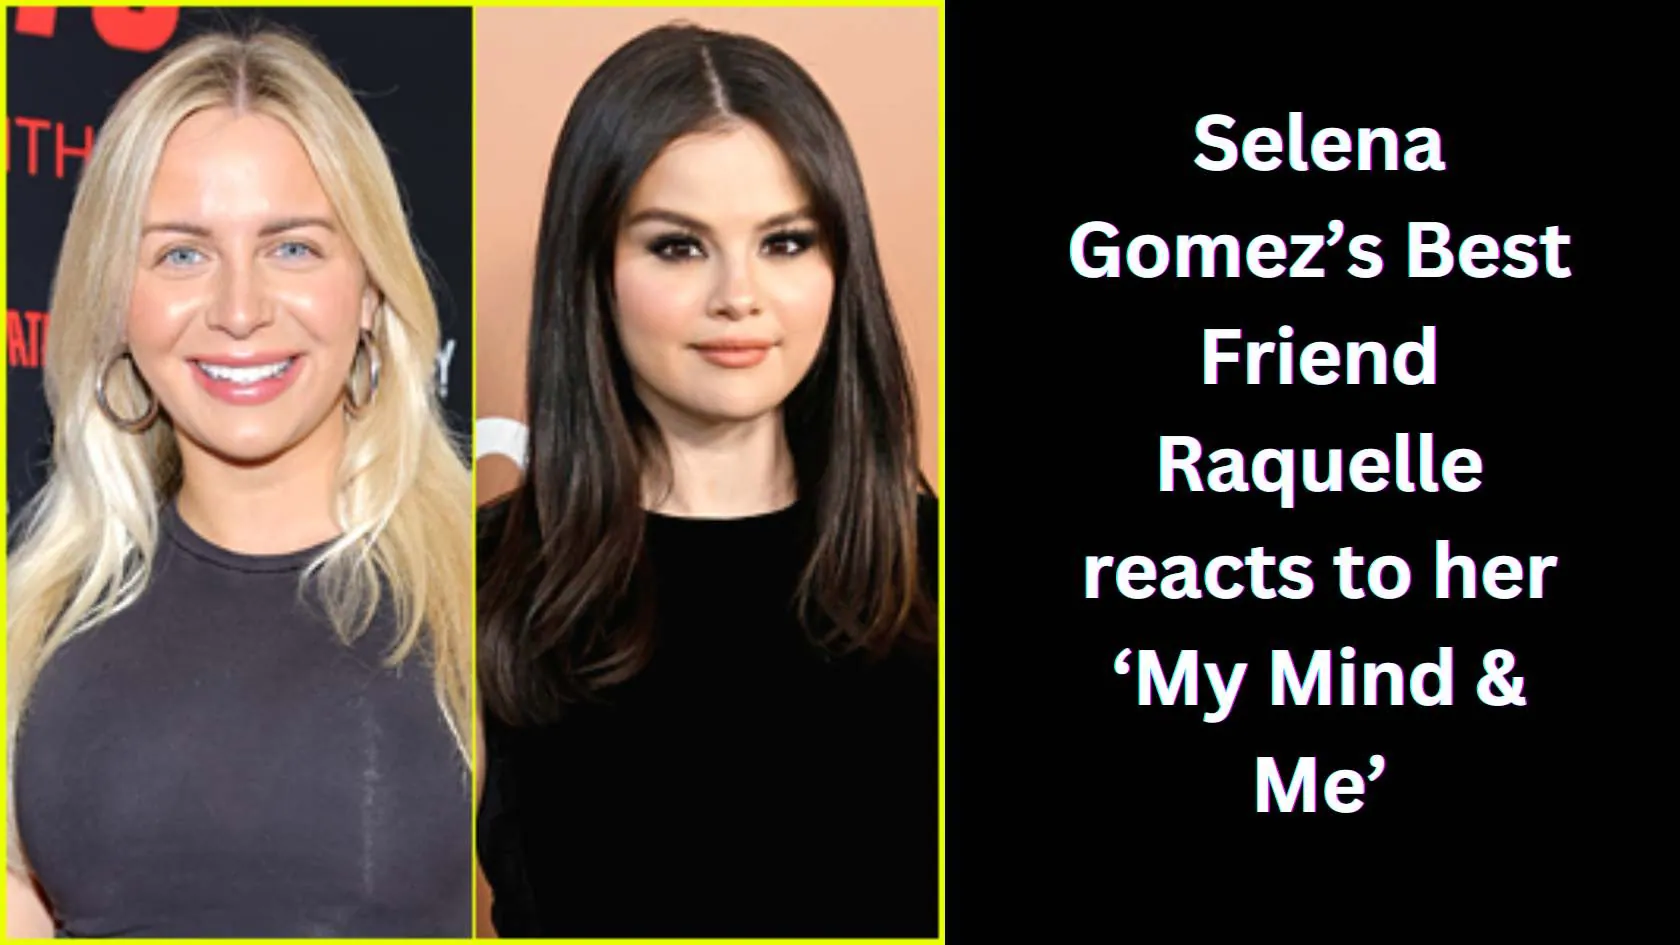 Selena Gomez’s Best Friend Raquelle reacts to her ‘My Mind & Me’